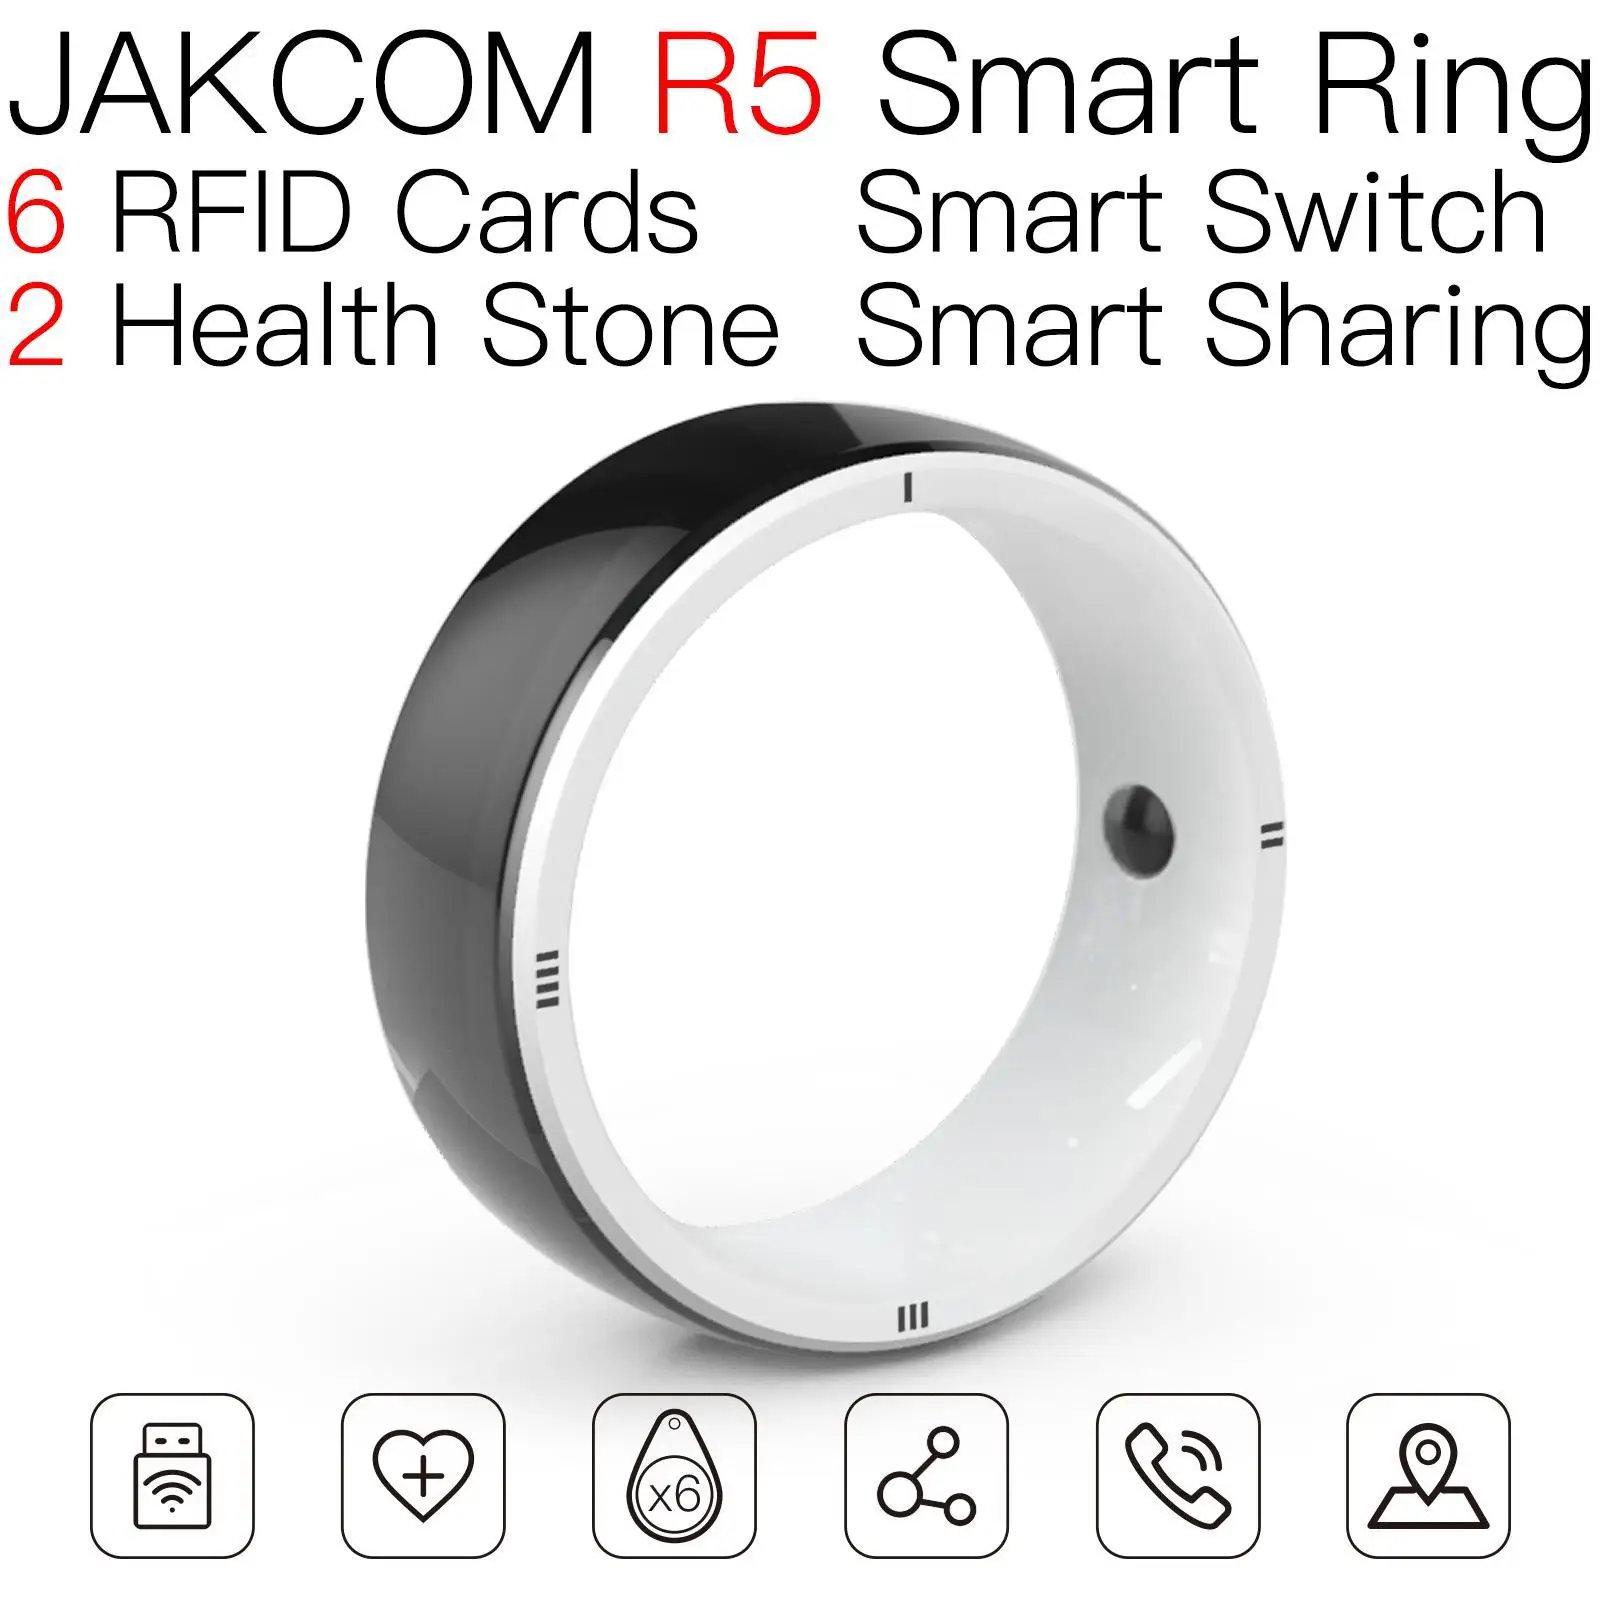 

JAKCOM R5 Smart Ring Super value than nfc sticker tap chip for dogs asic s17 bm1397 rfid reader led tag uhf transparent s50 uid